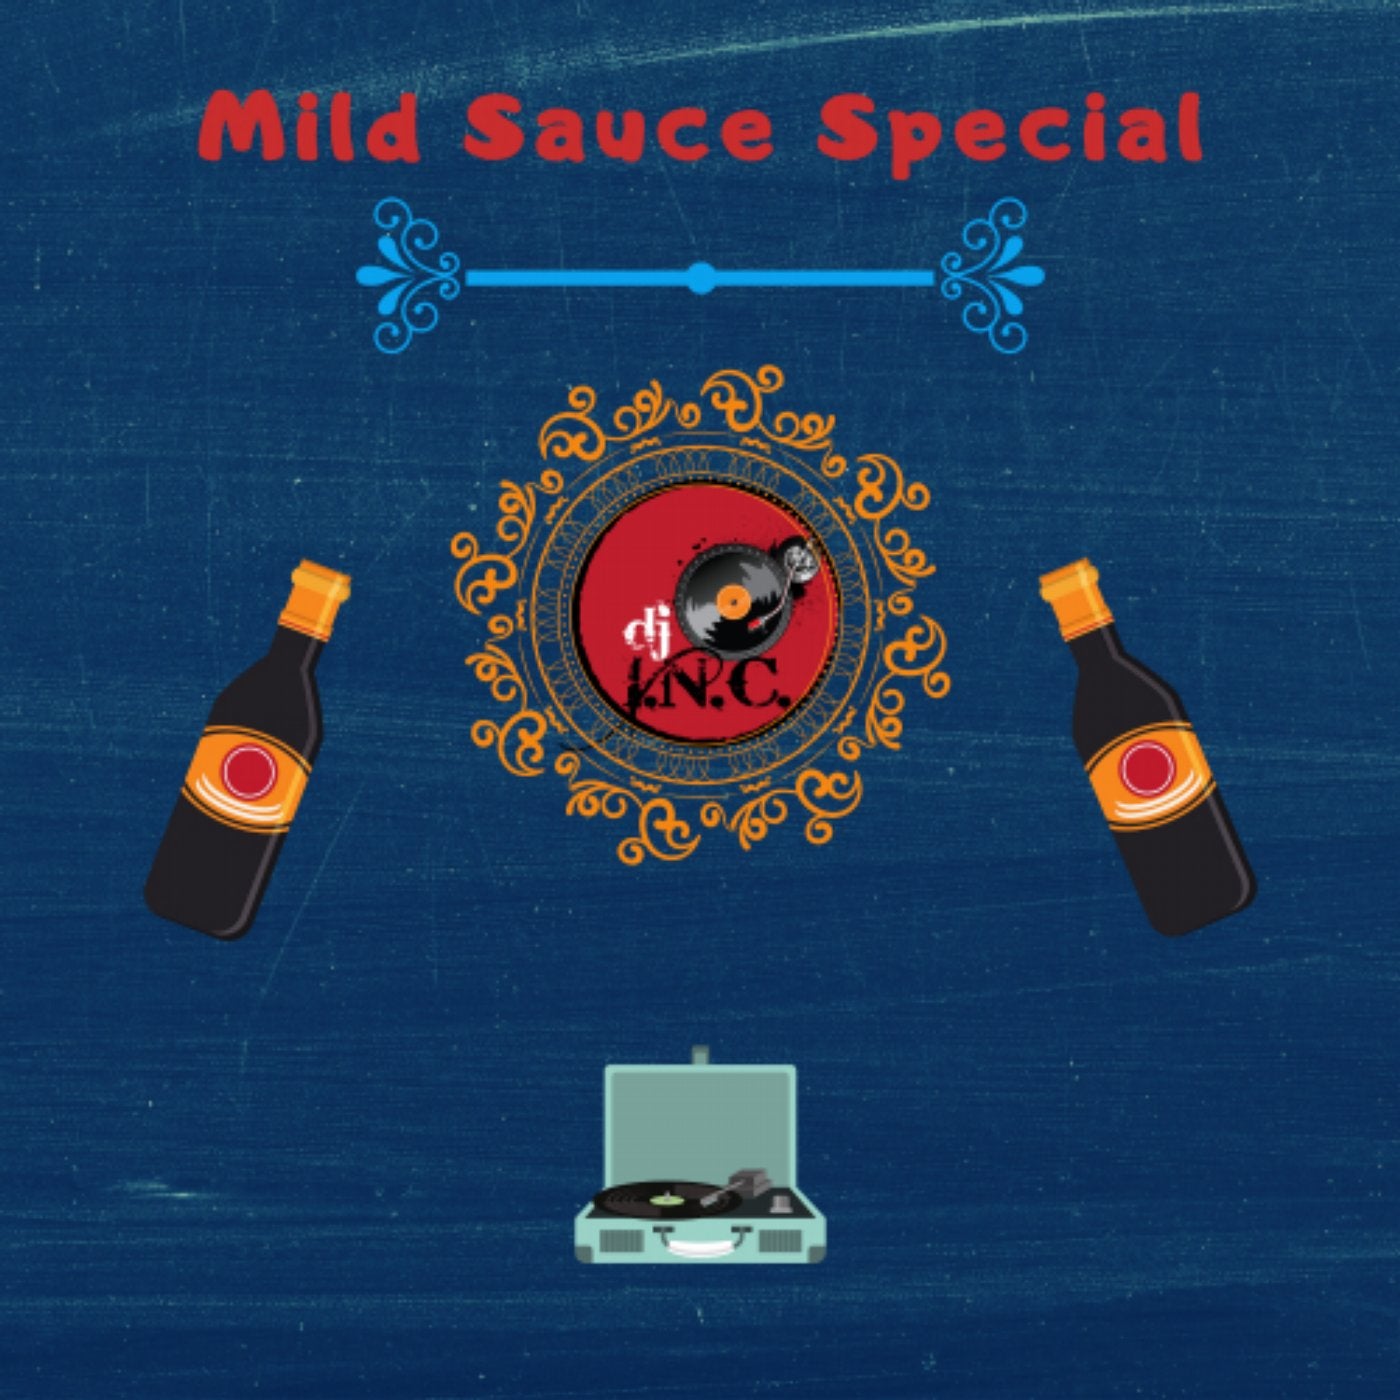 Mild Sauce Special